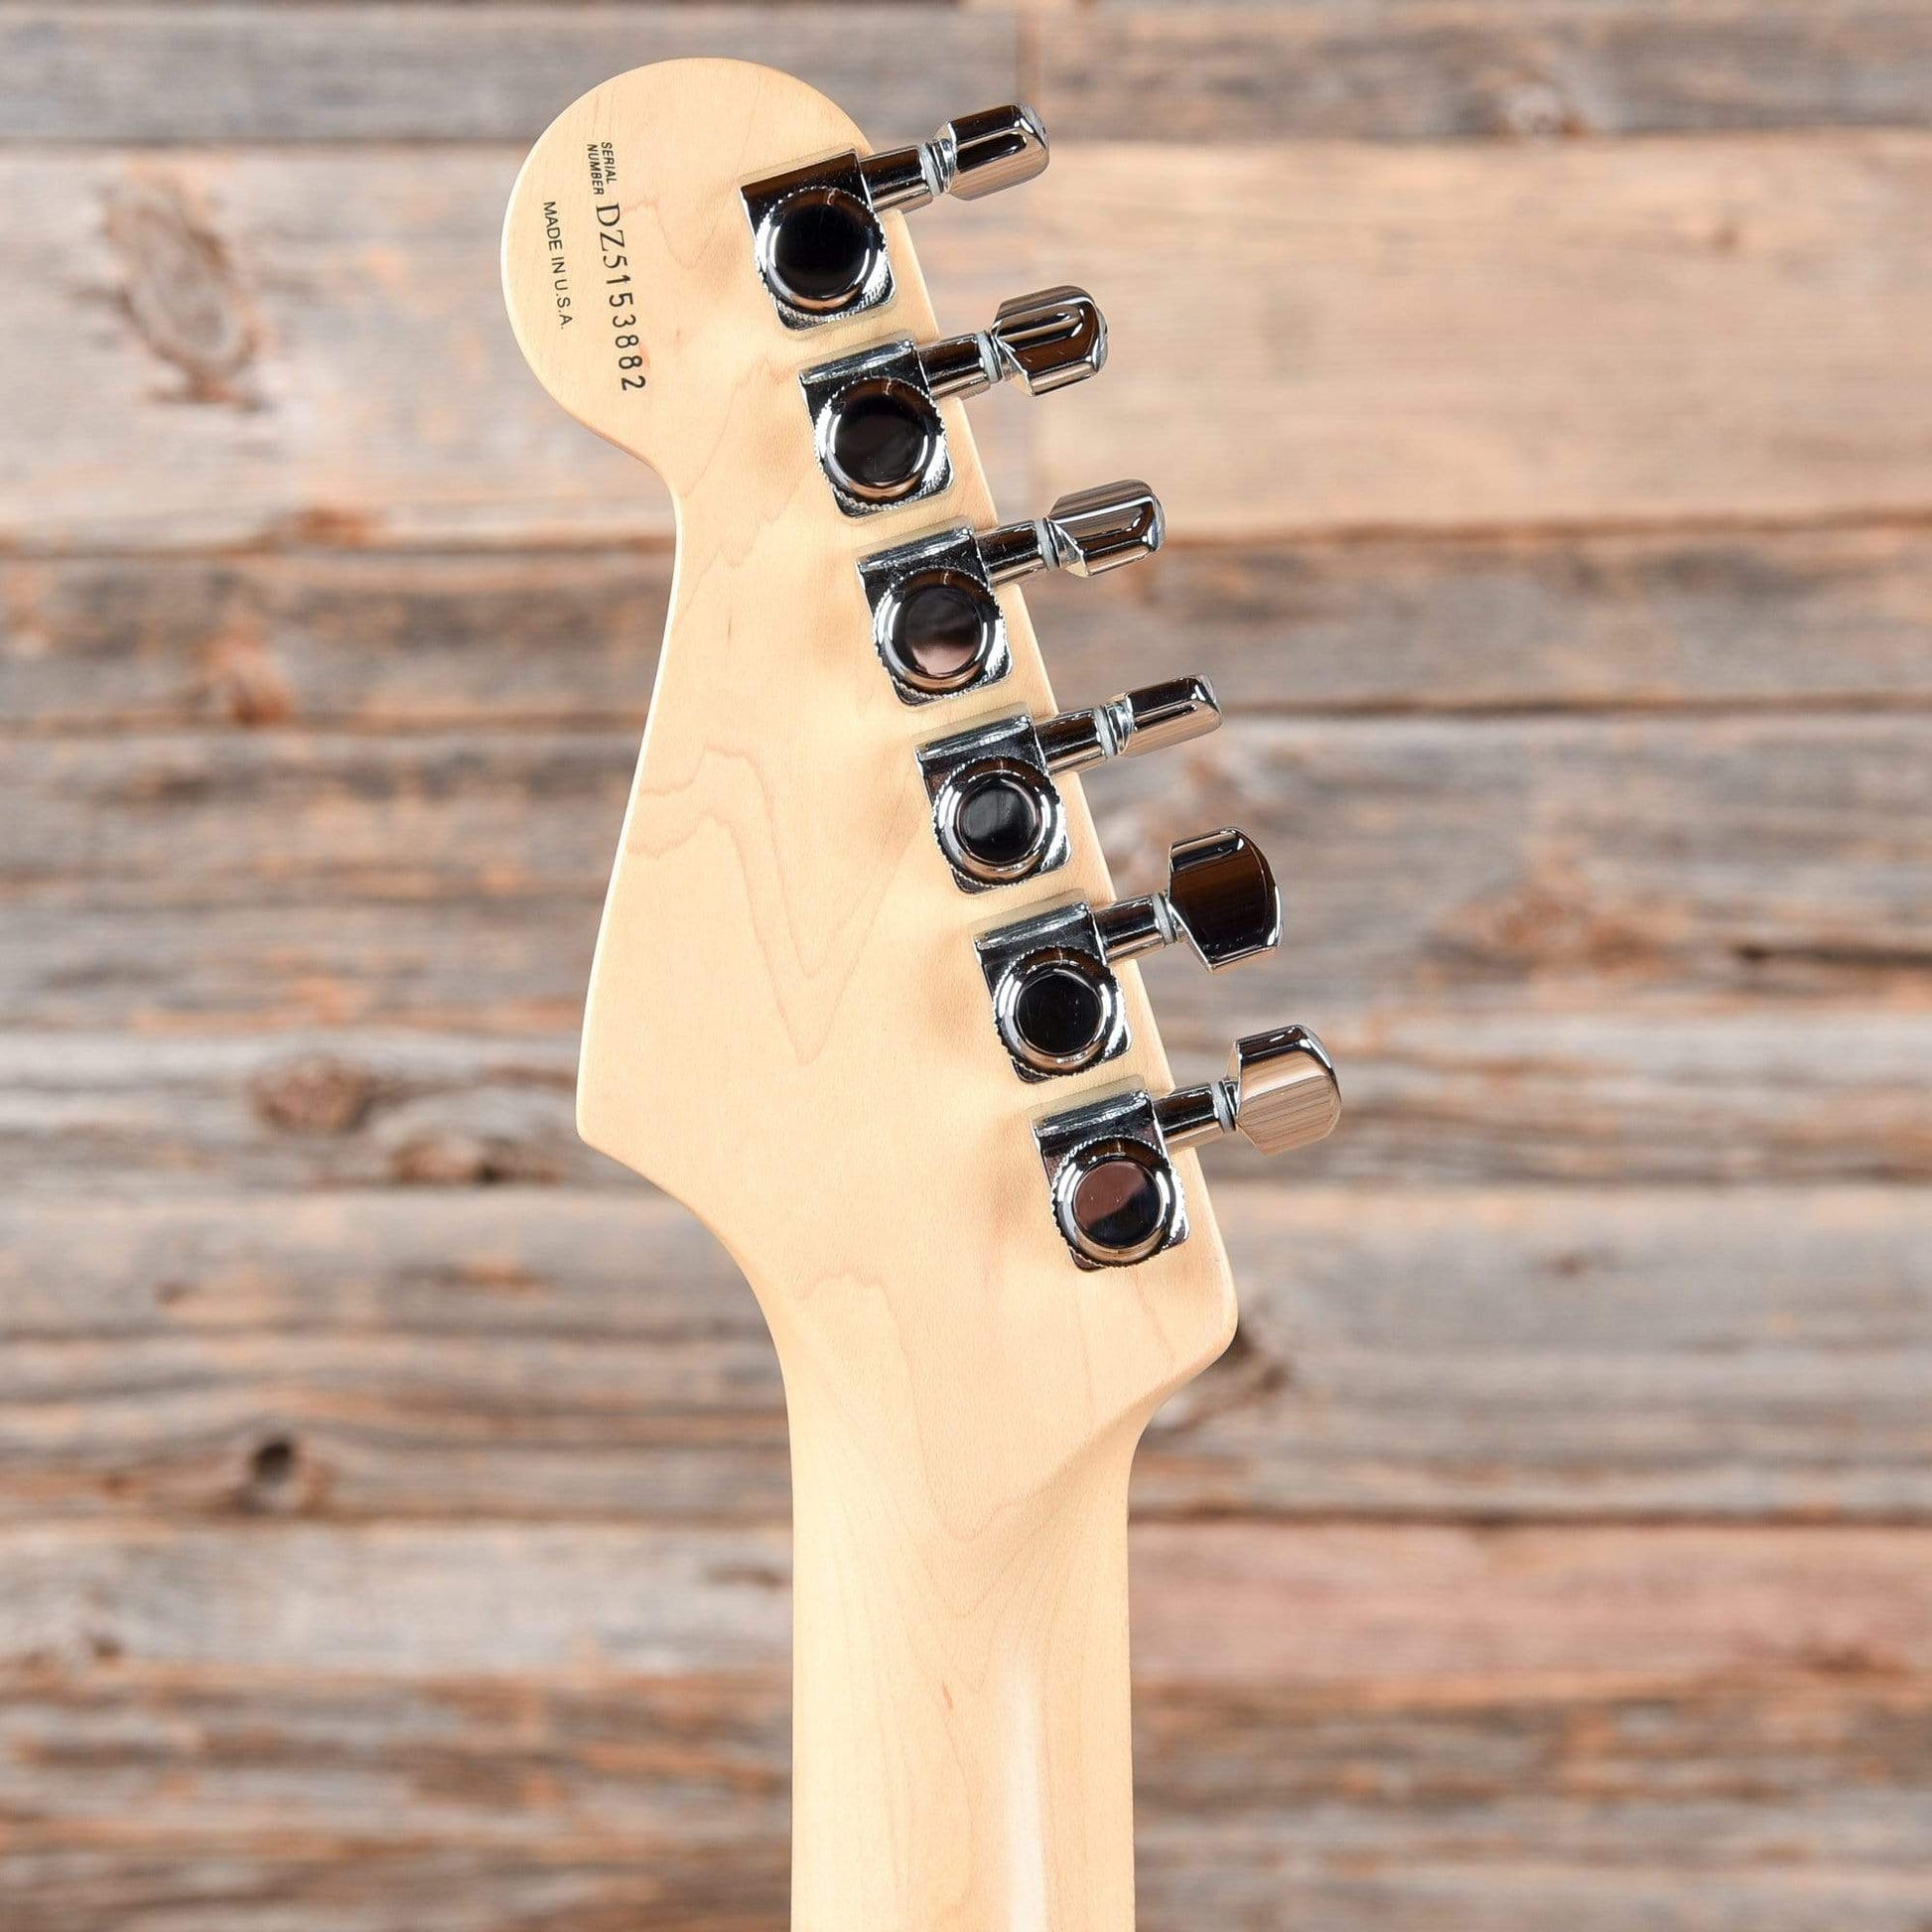 Fender American Deluxe Stratocaster Sunburst 2005 Electric Guitars / Solid Body